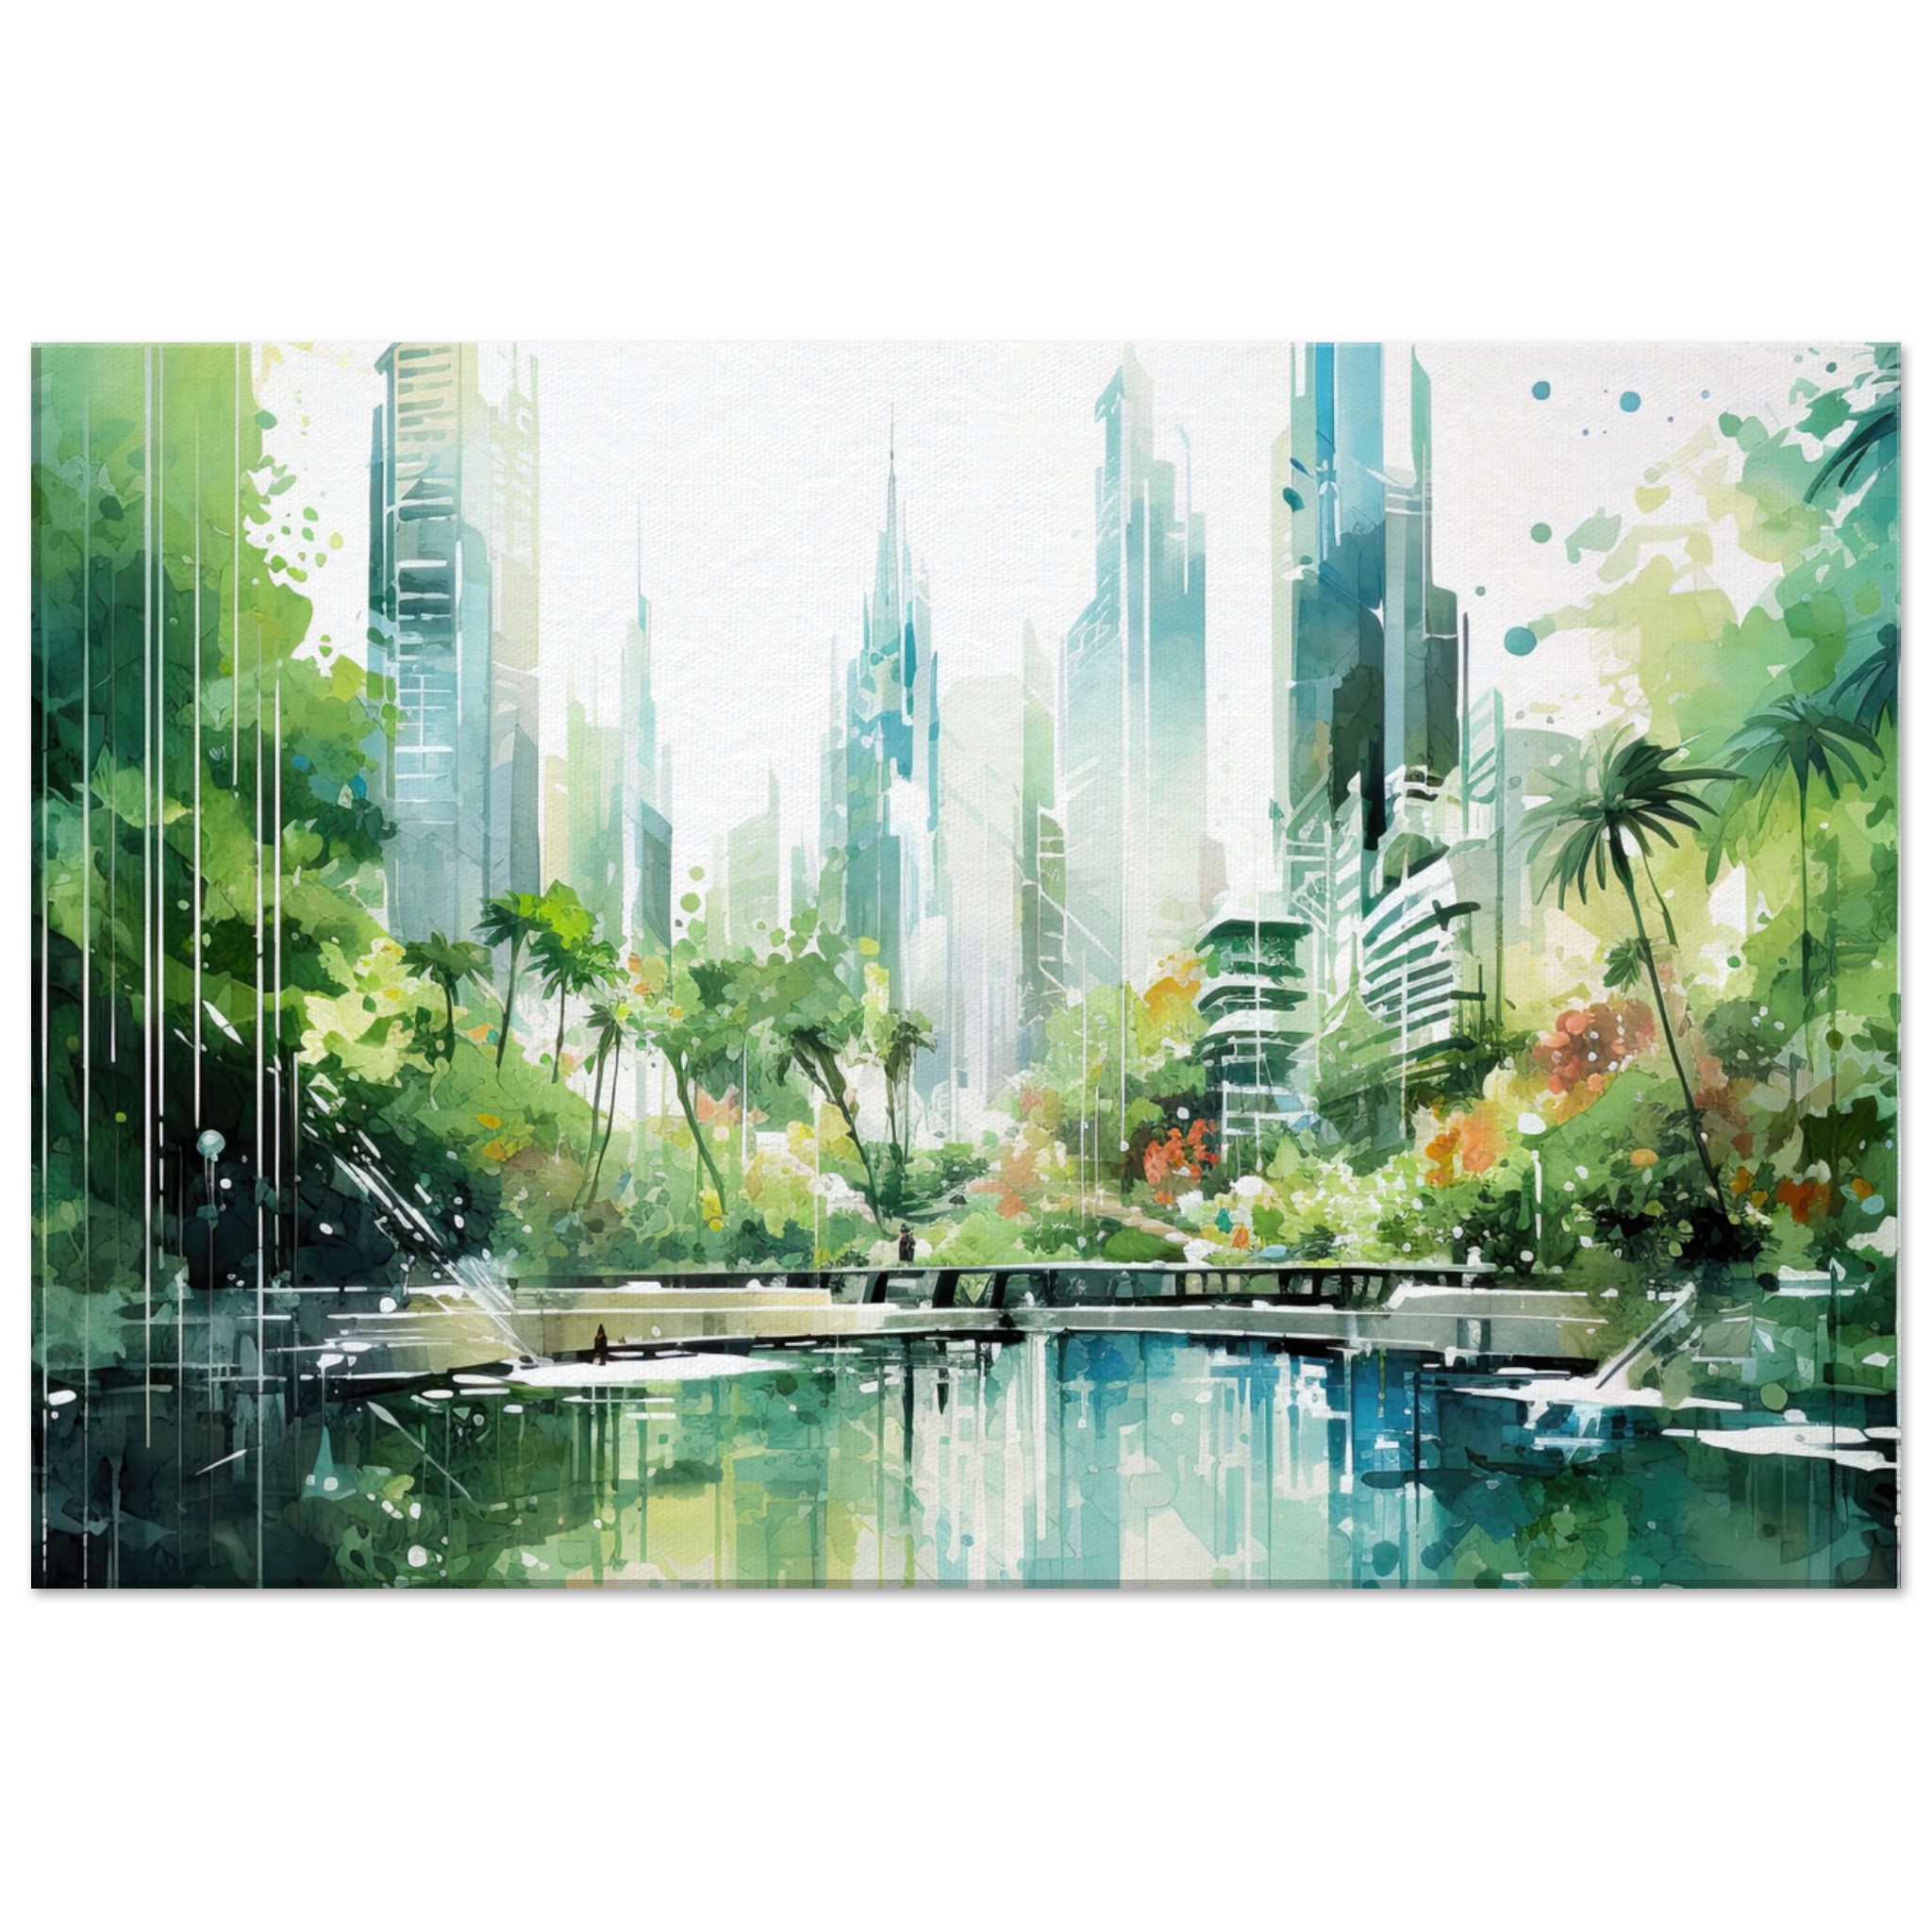 Rainy City Day Watercolor Canvas Print – 50×75 cm / 20×30″, Thick